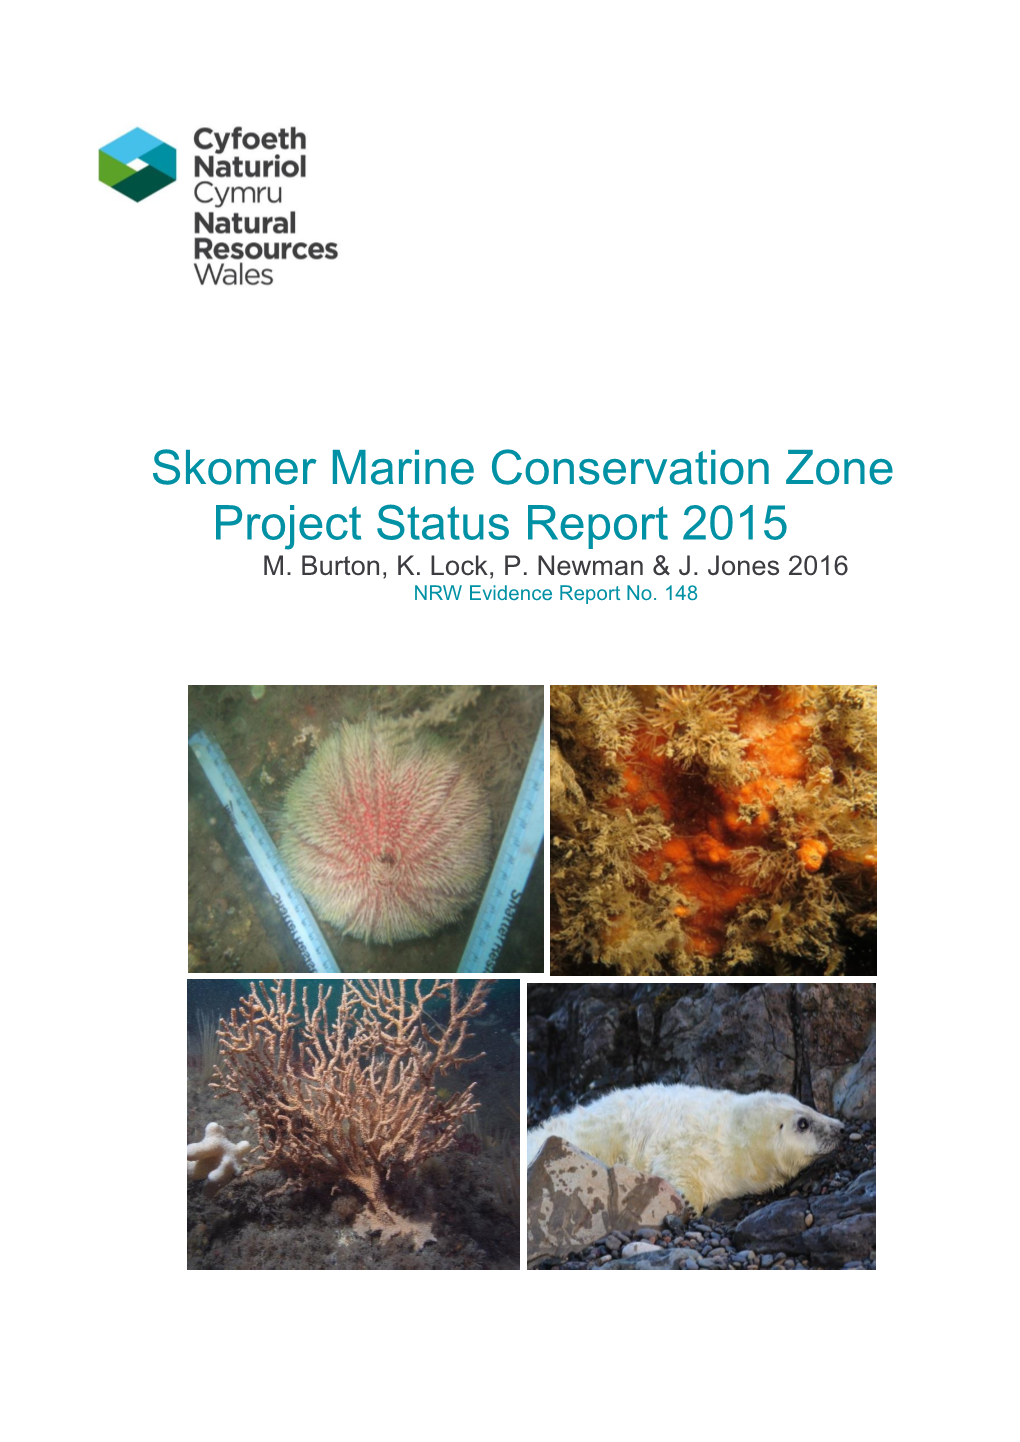 Skomer Marine Conservation Zone Project Status Report 2015 M